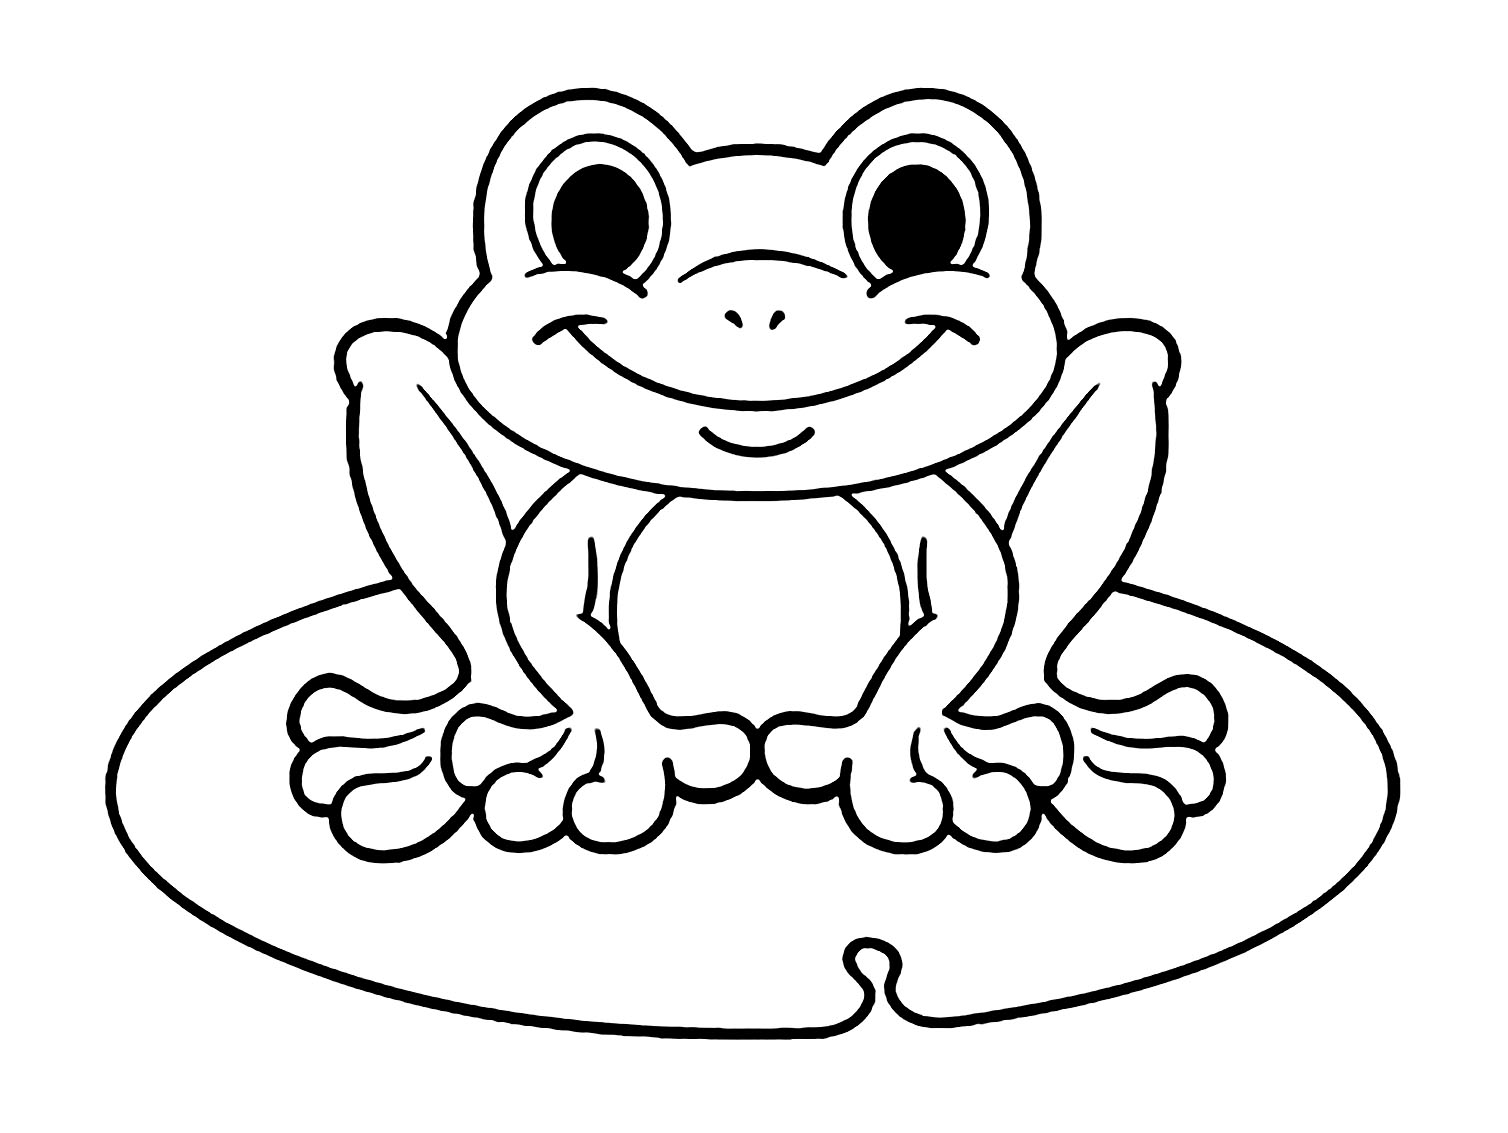 Coloring book beckoning frog-teremok